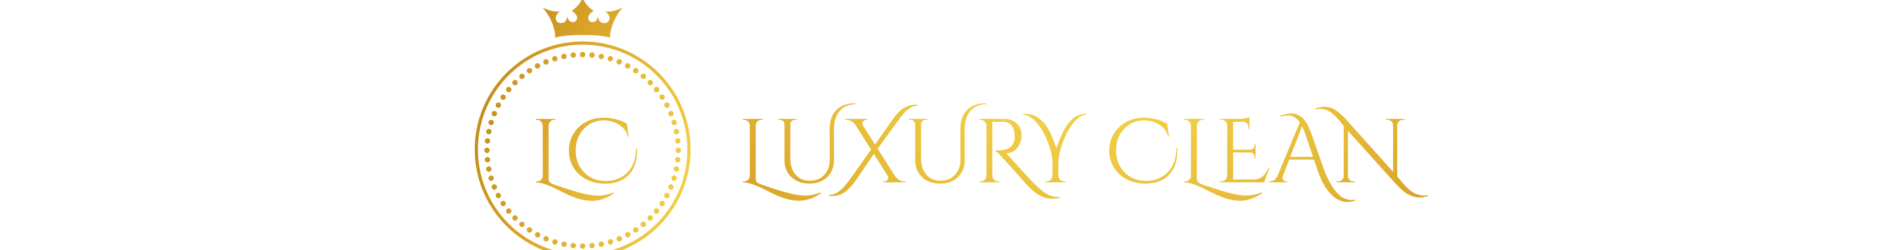 Luxury Clean logo